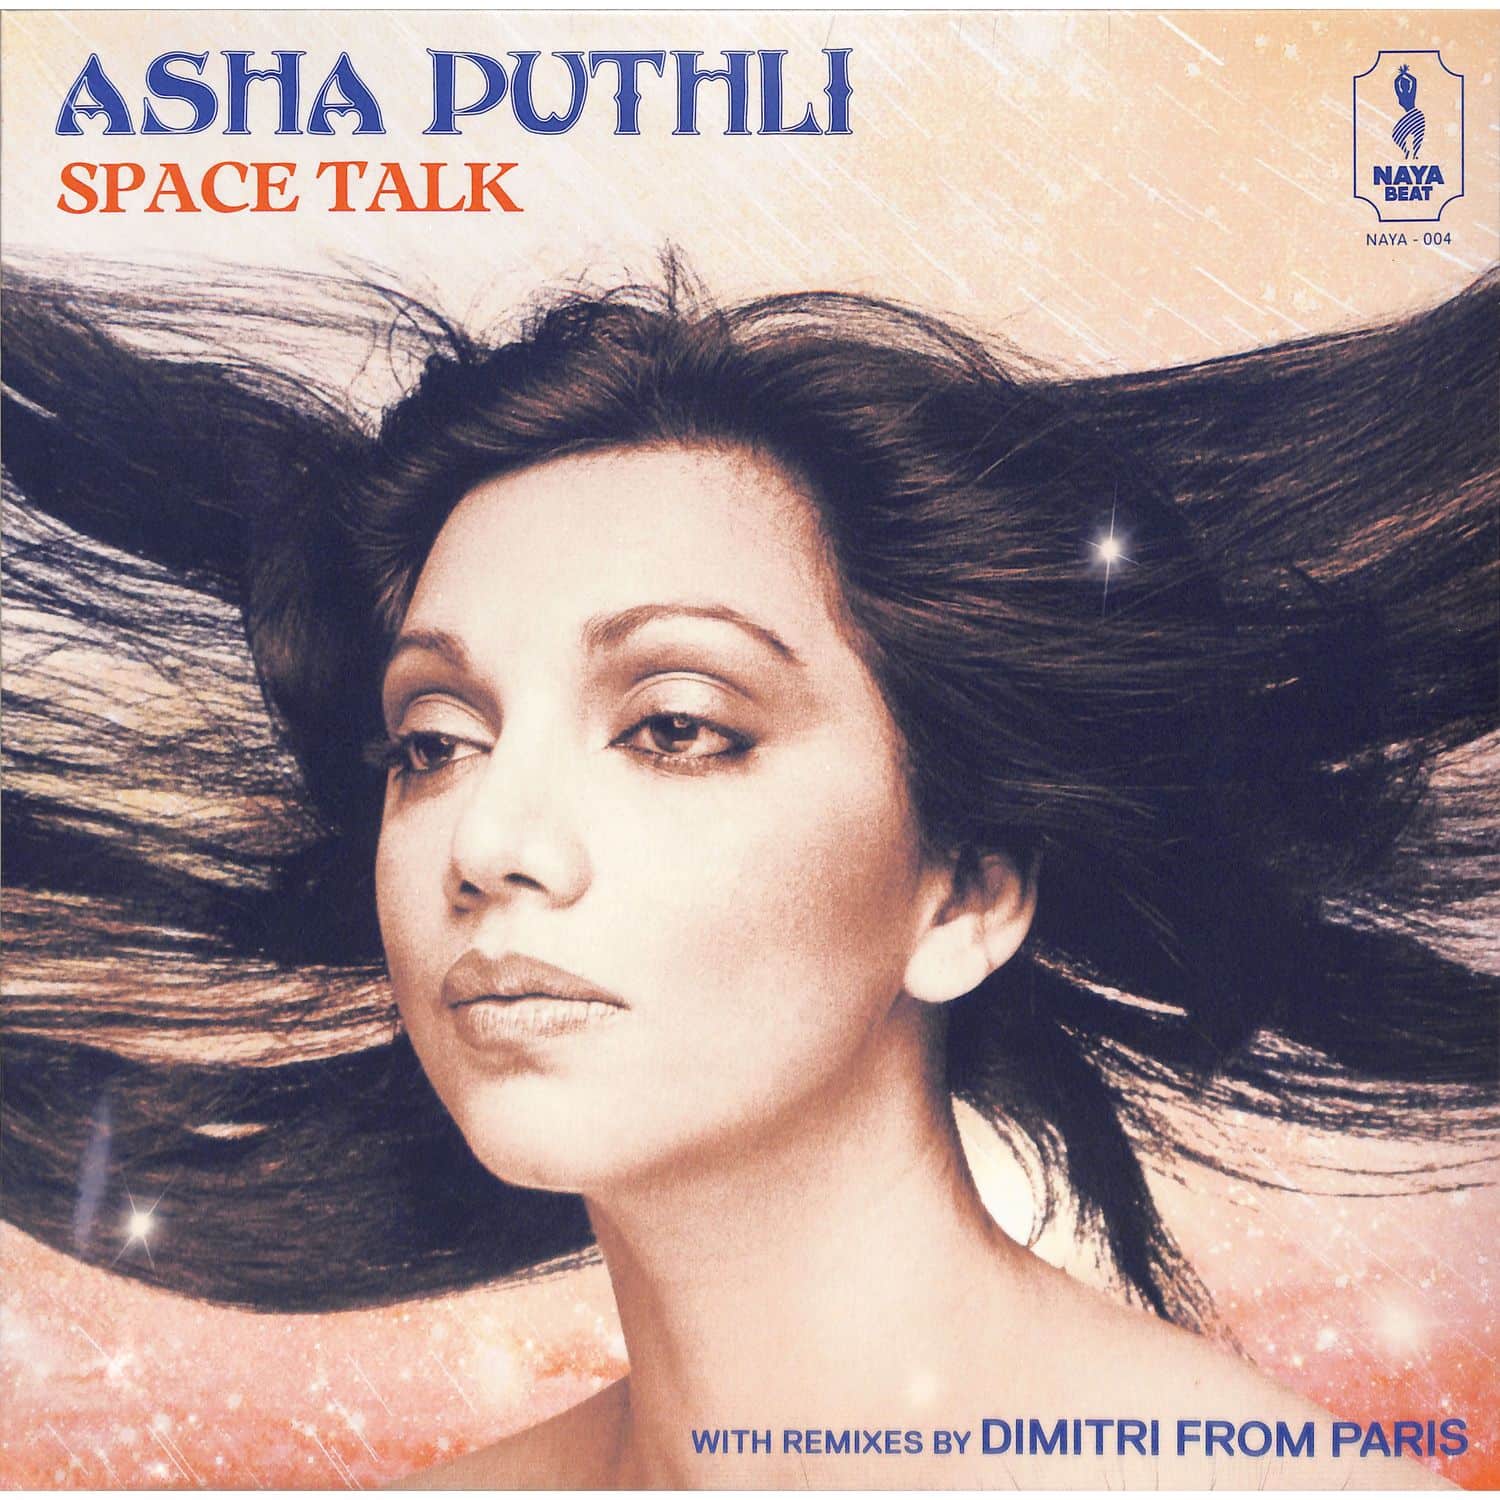 Asha Puthli - SPACE TALK 